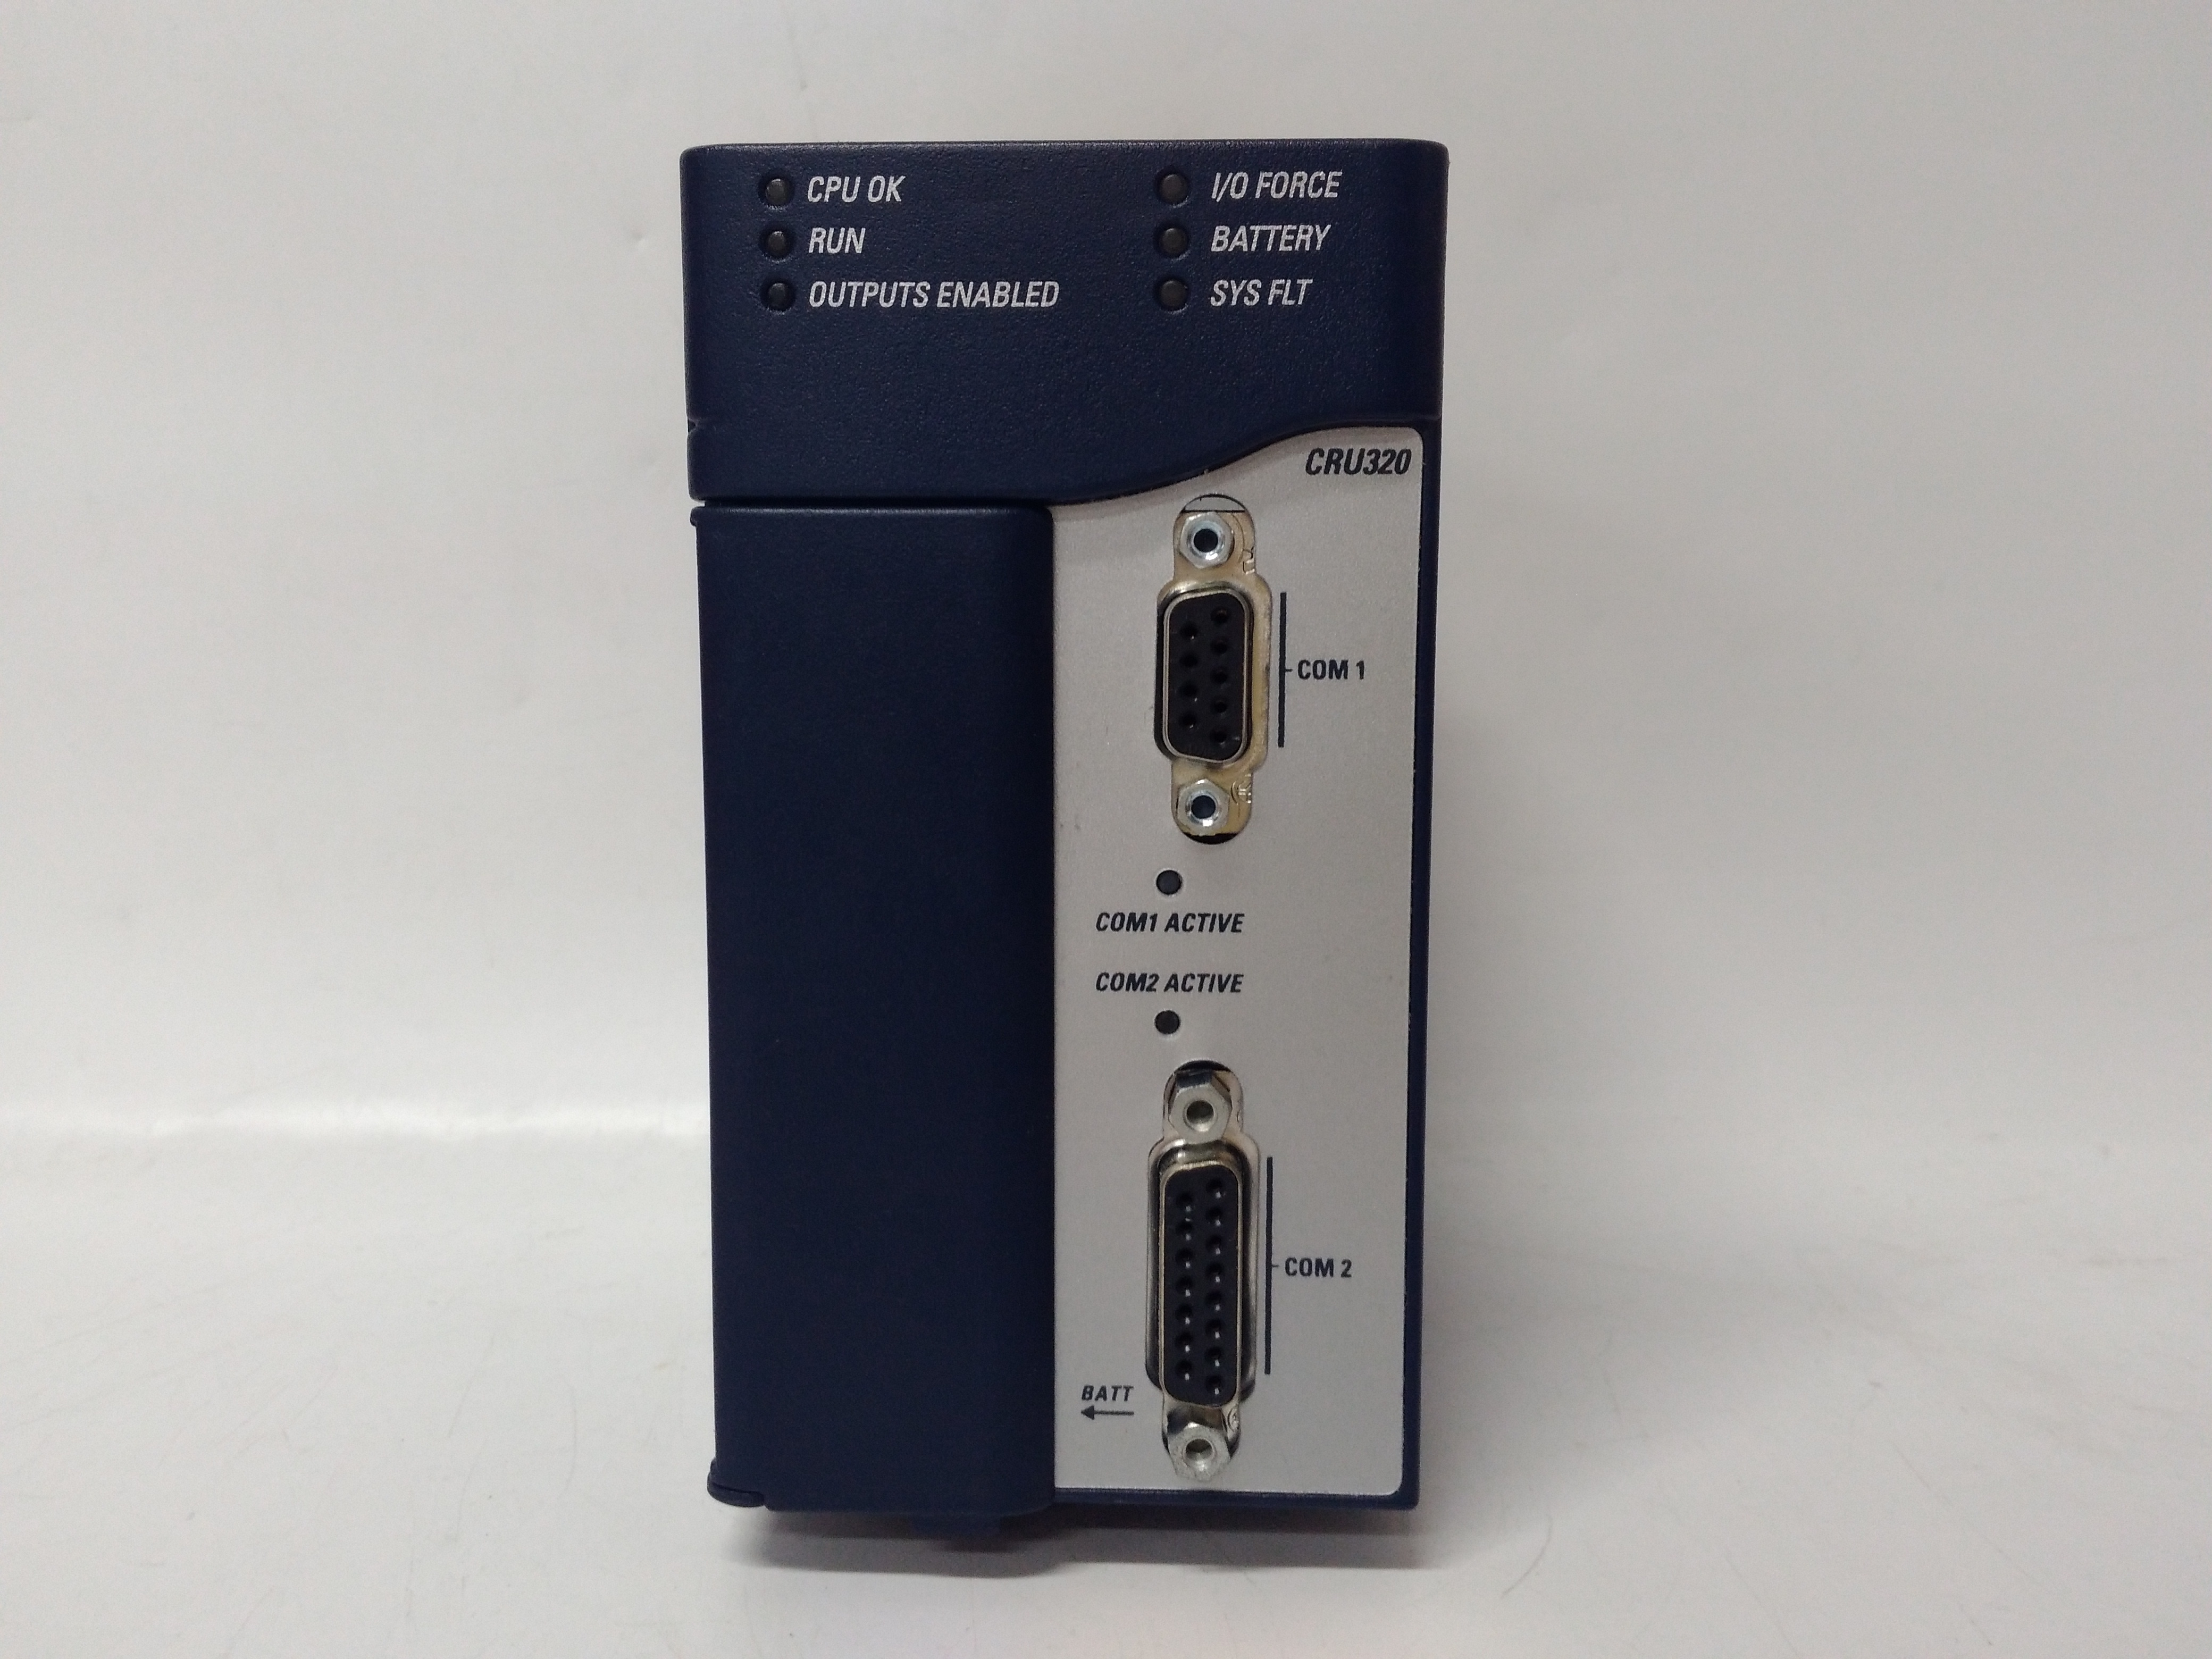 IC693NIU004CA美国GE通用电气PLC模块备件 全新原装,现货出售,质保1年